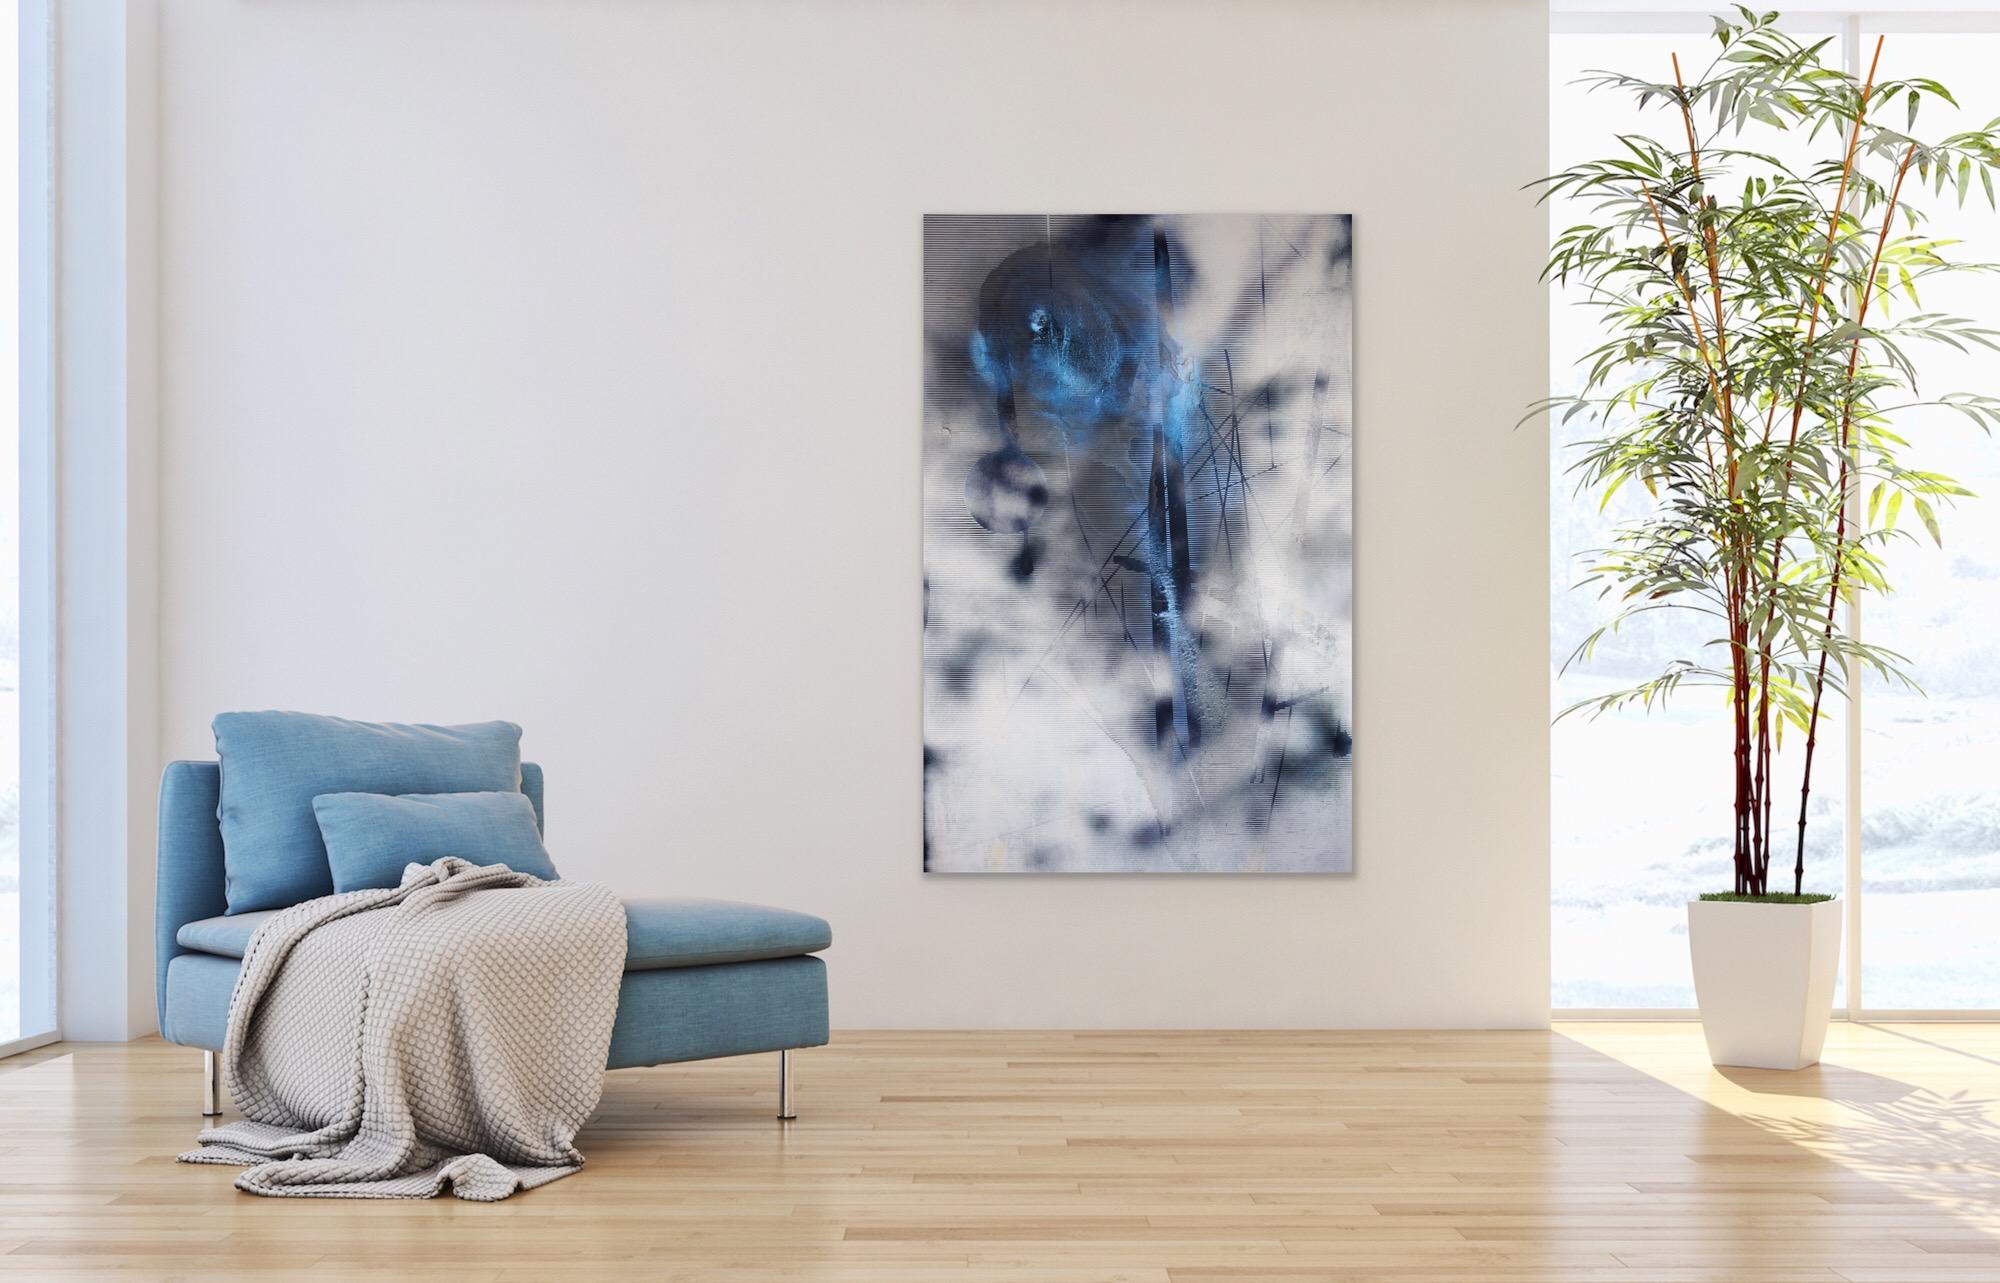 Turbulence (grid painting abstract contemporary navy blue contemporary art) - Abstract Mixed Media Art by Melisa Taylor Metzger